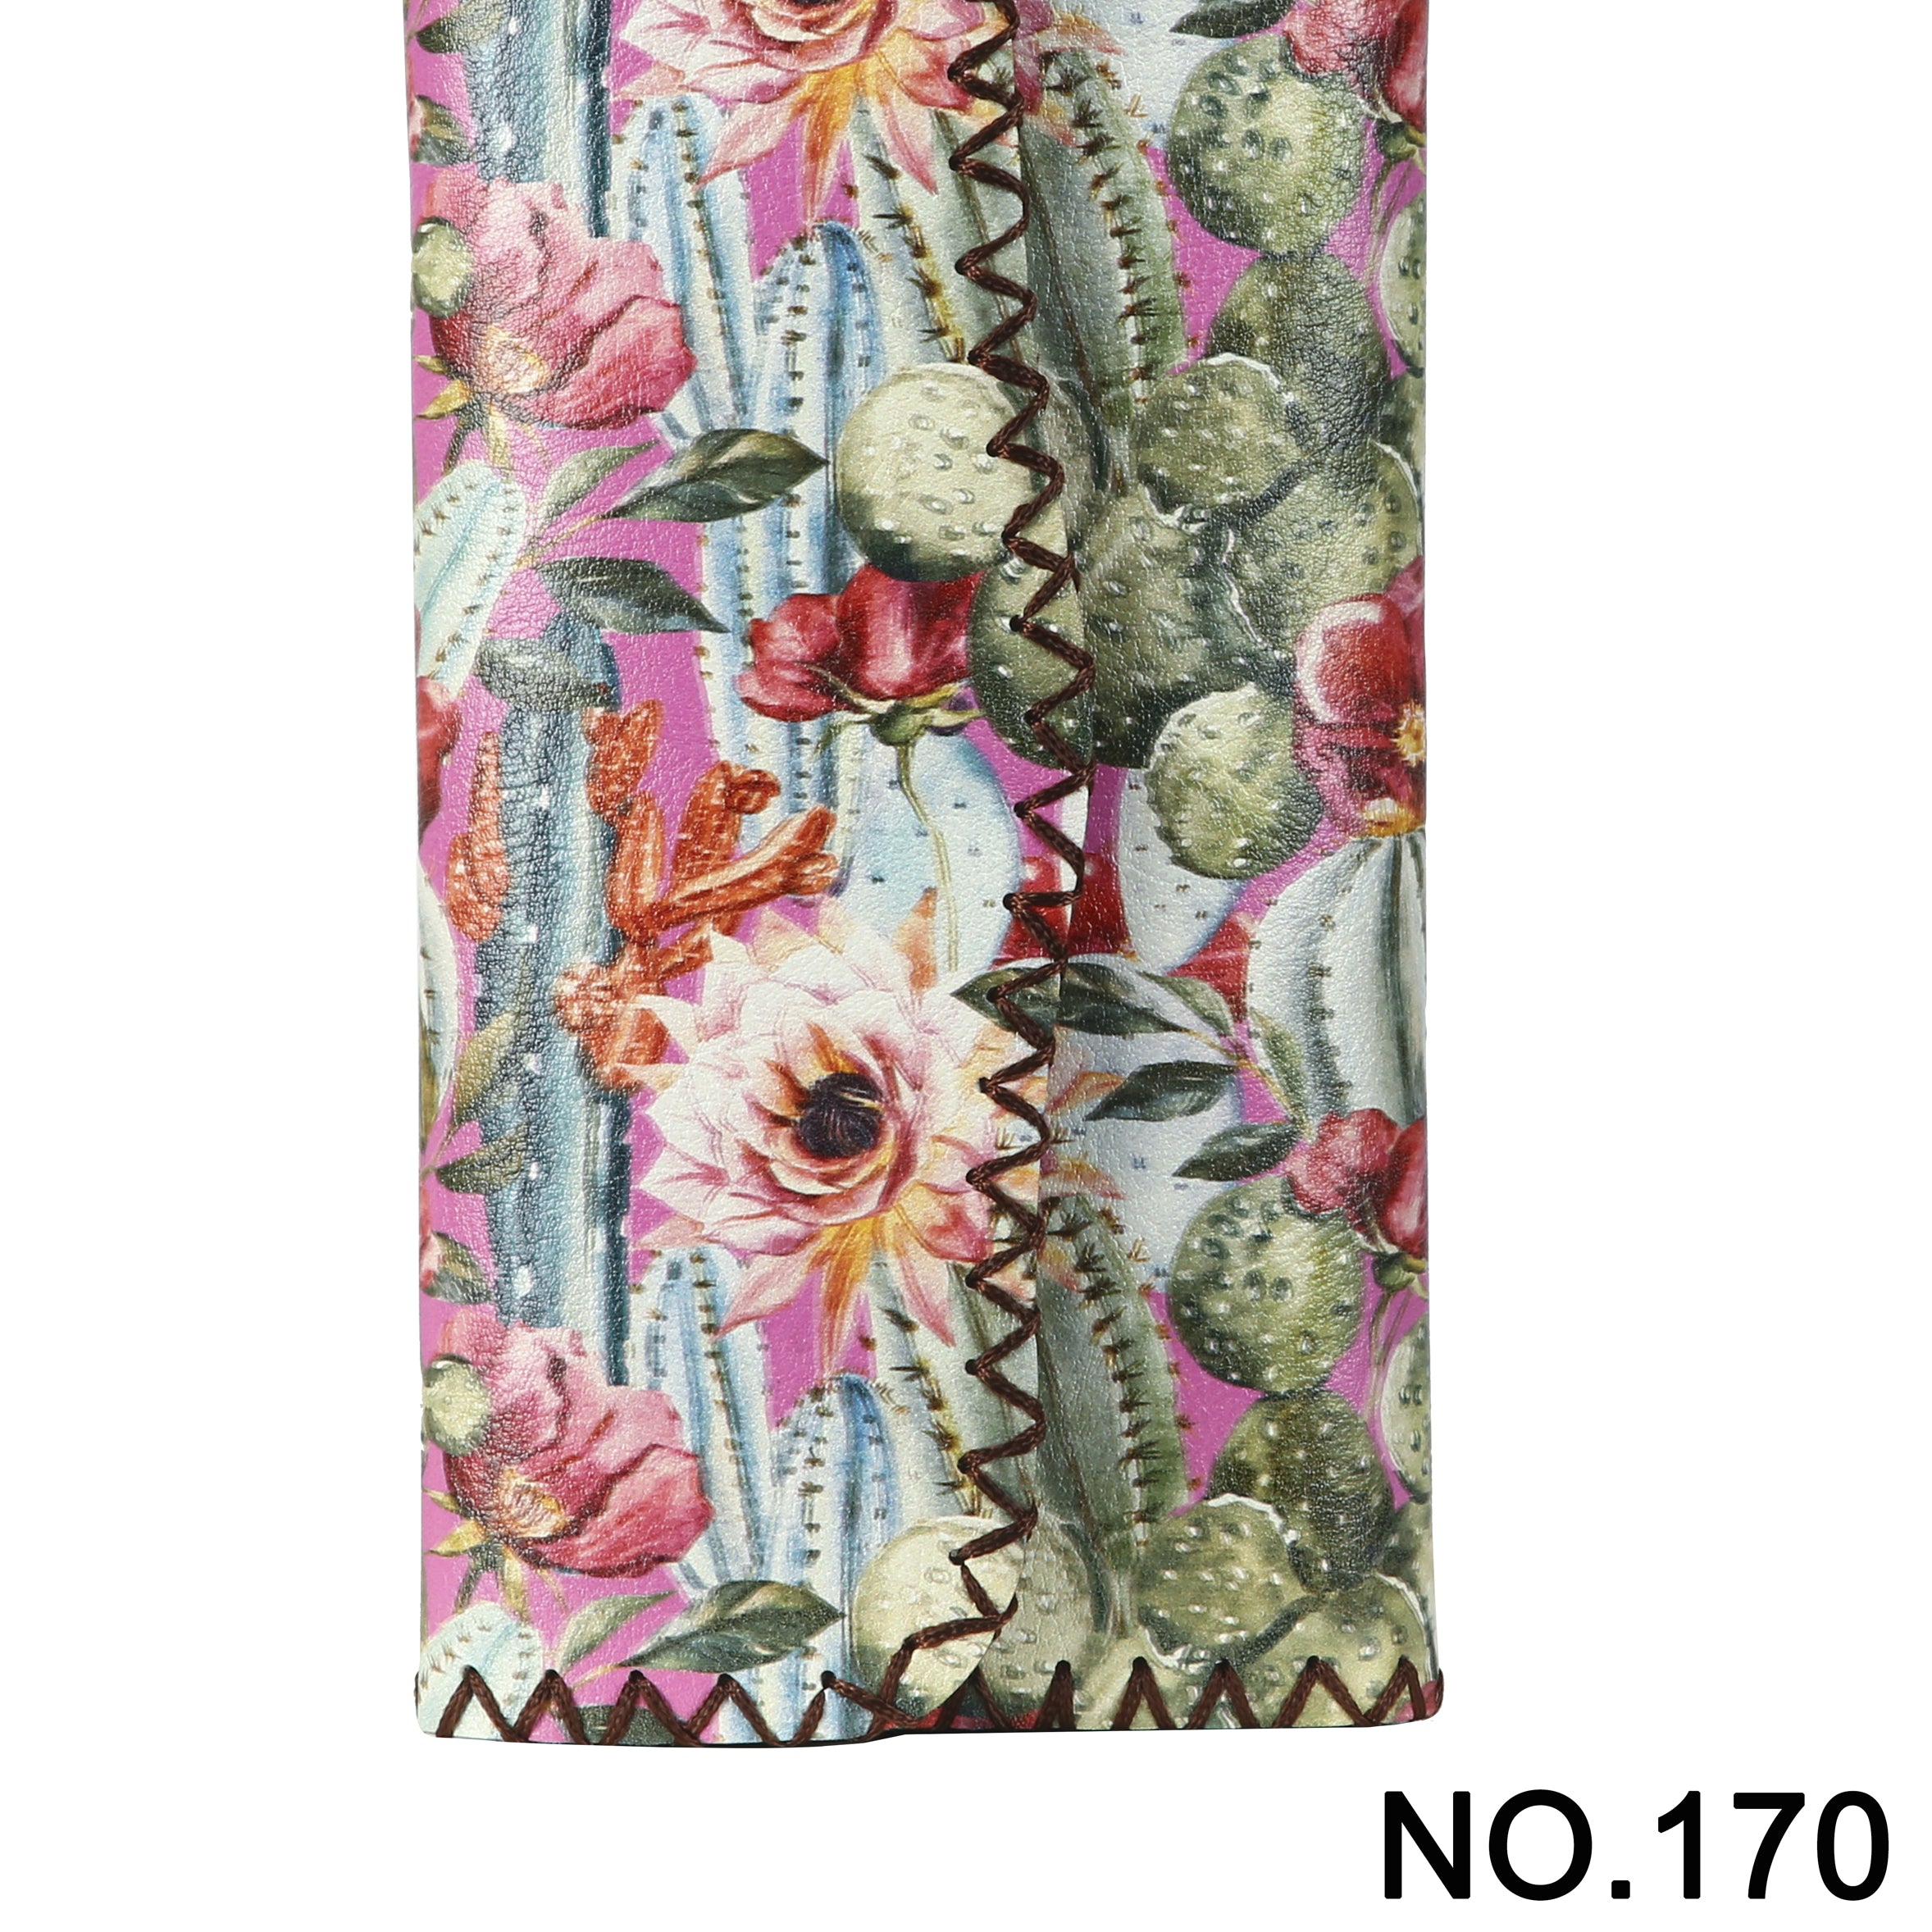 Floral Cactus Printed Wallet HB0582 - NO.170